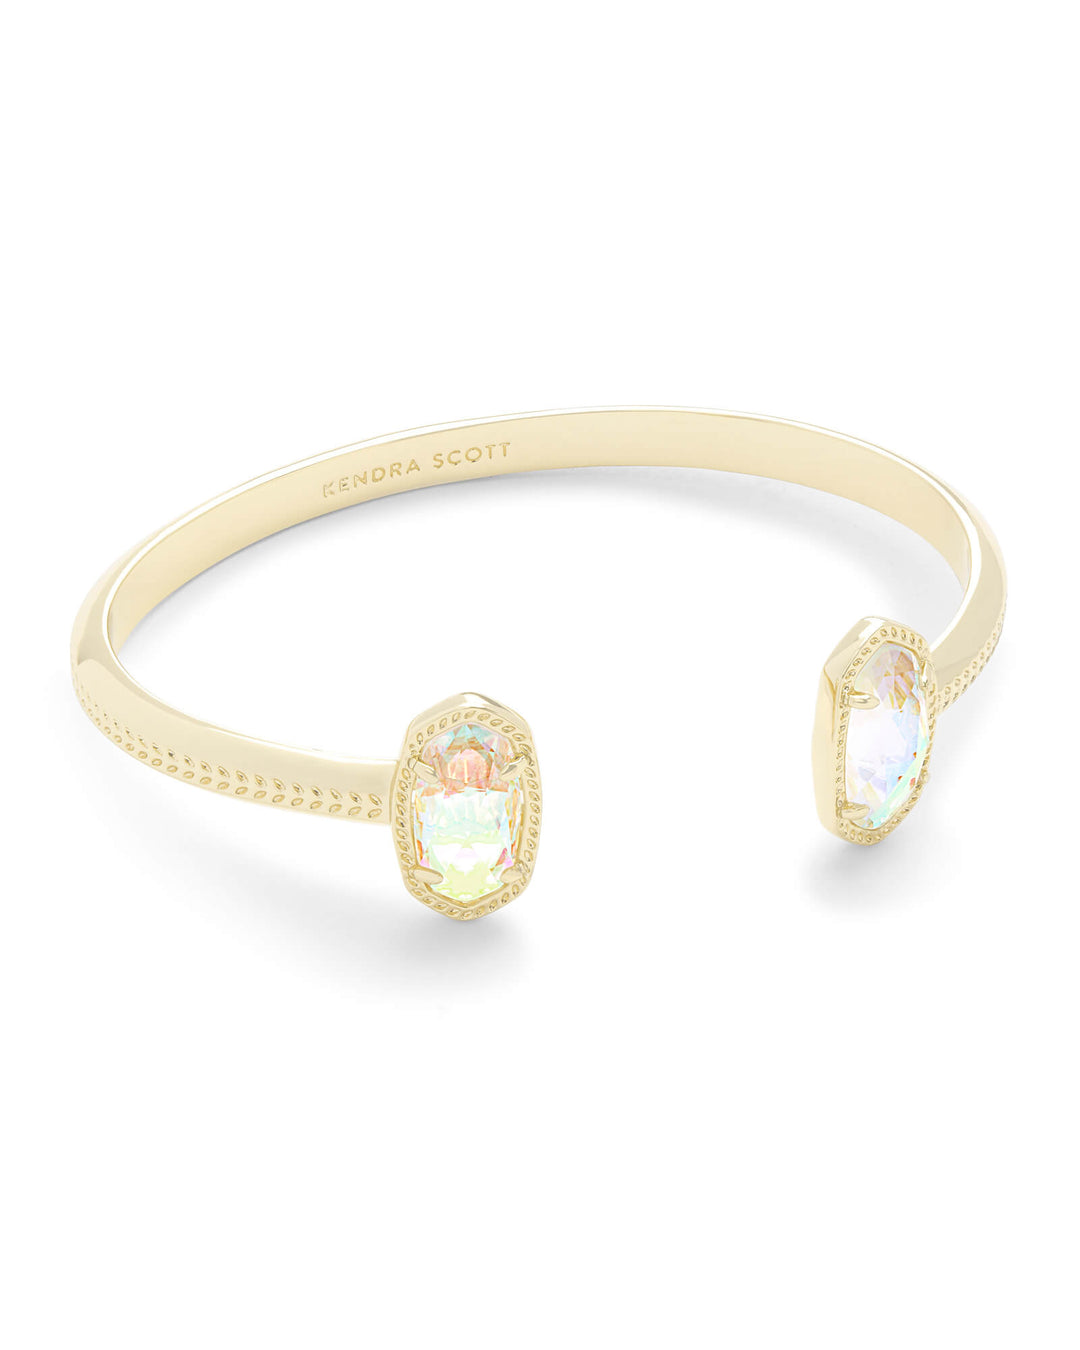 Kendra Scott Elton Gold Cuff Bracelet in Gold Dichroic Glass